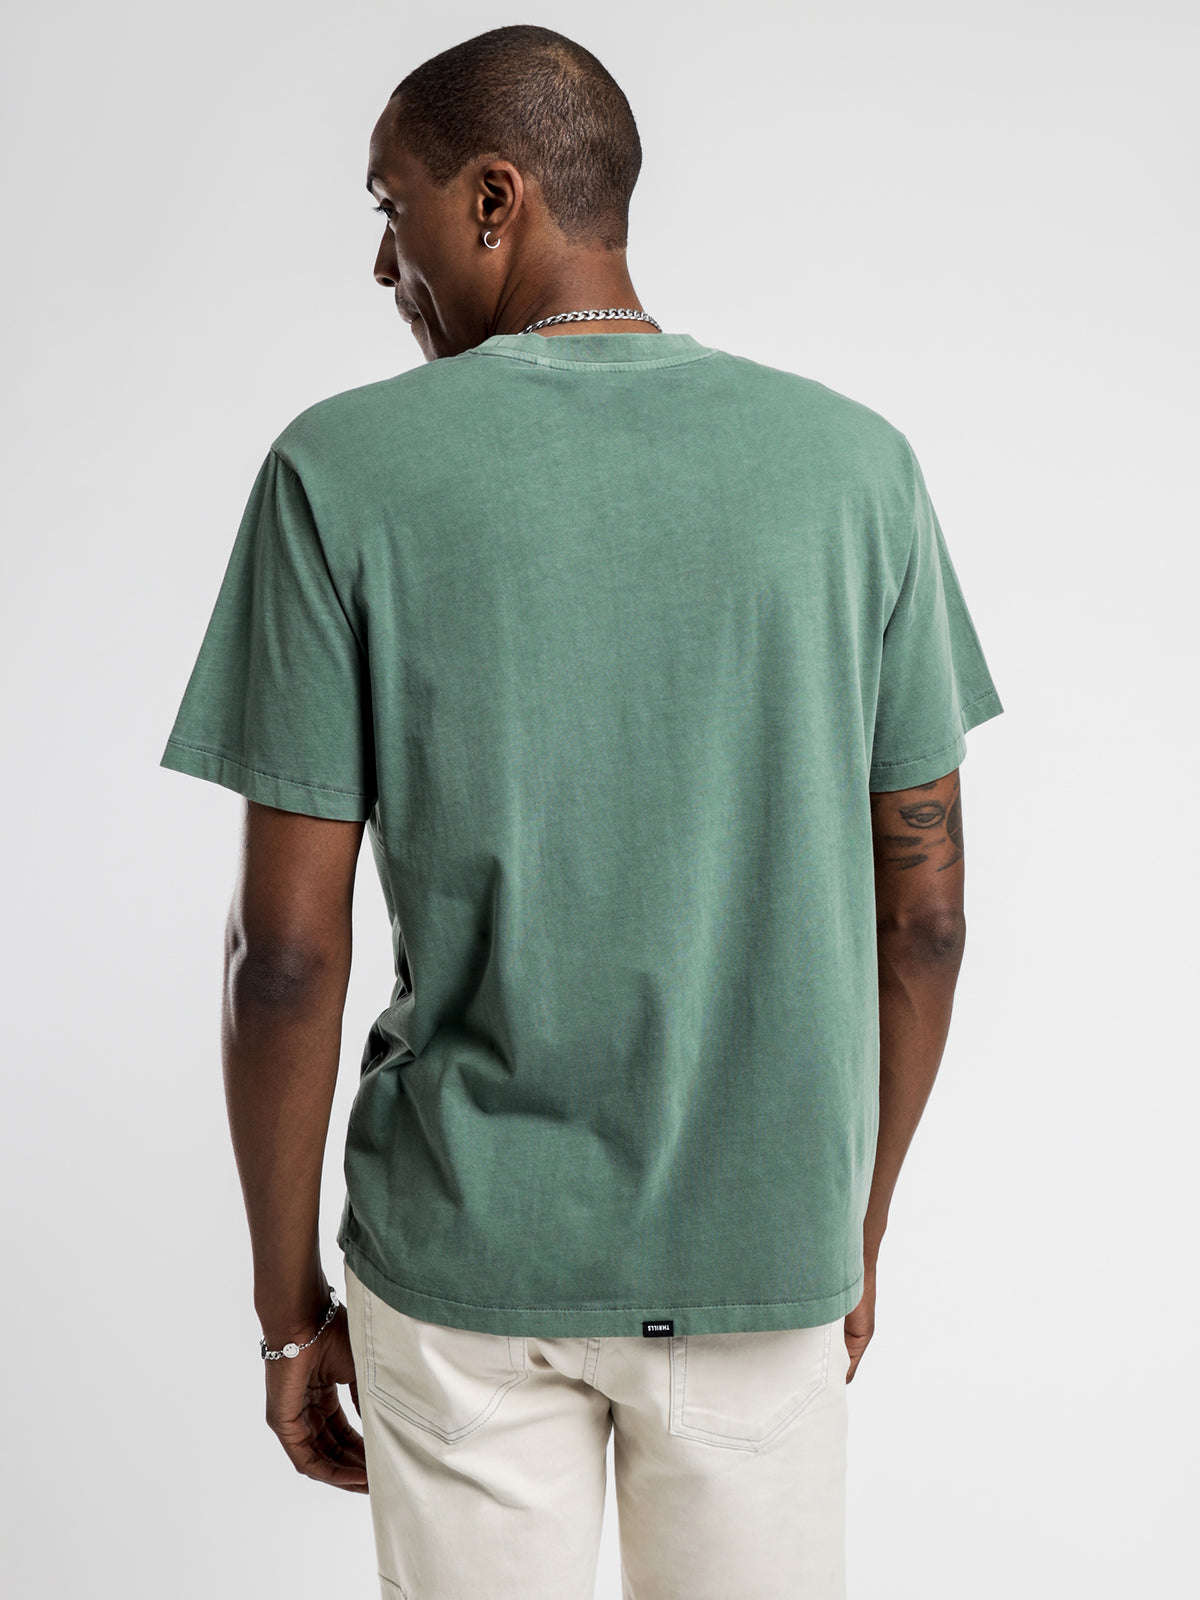 Minimal Thrills Merch Fit T-Shirt in Lume Green